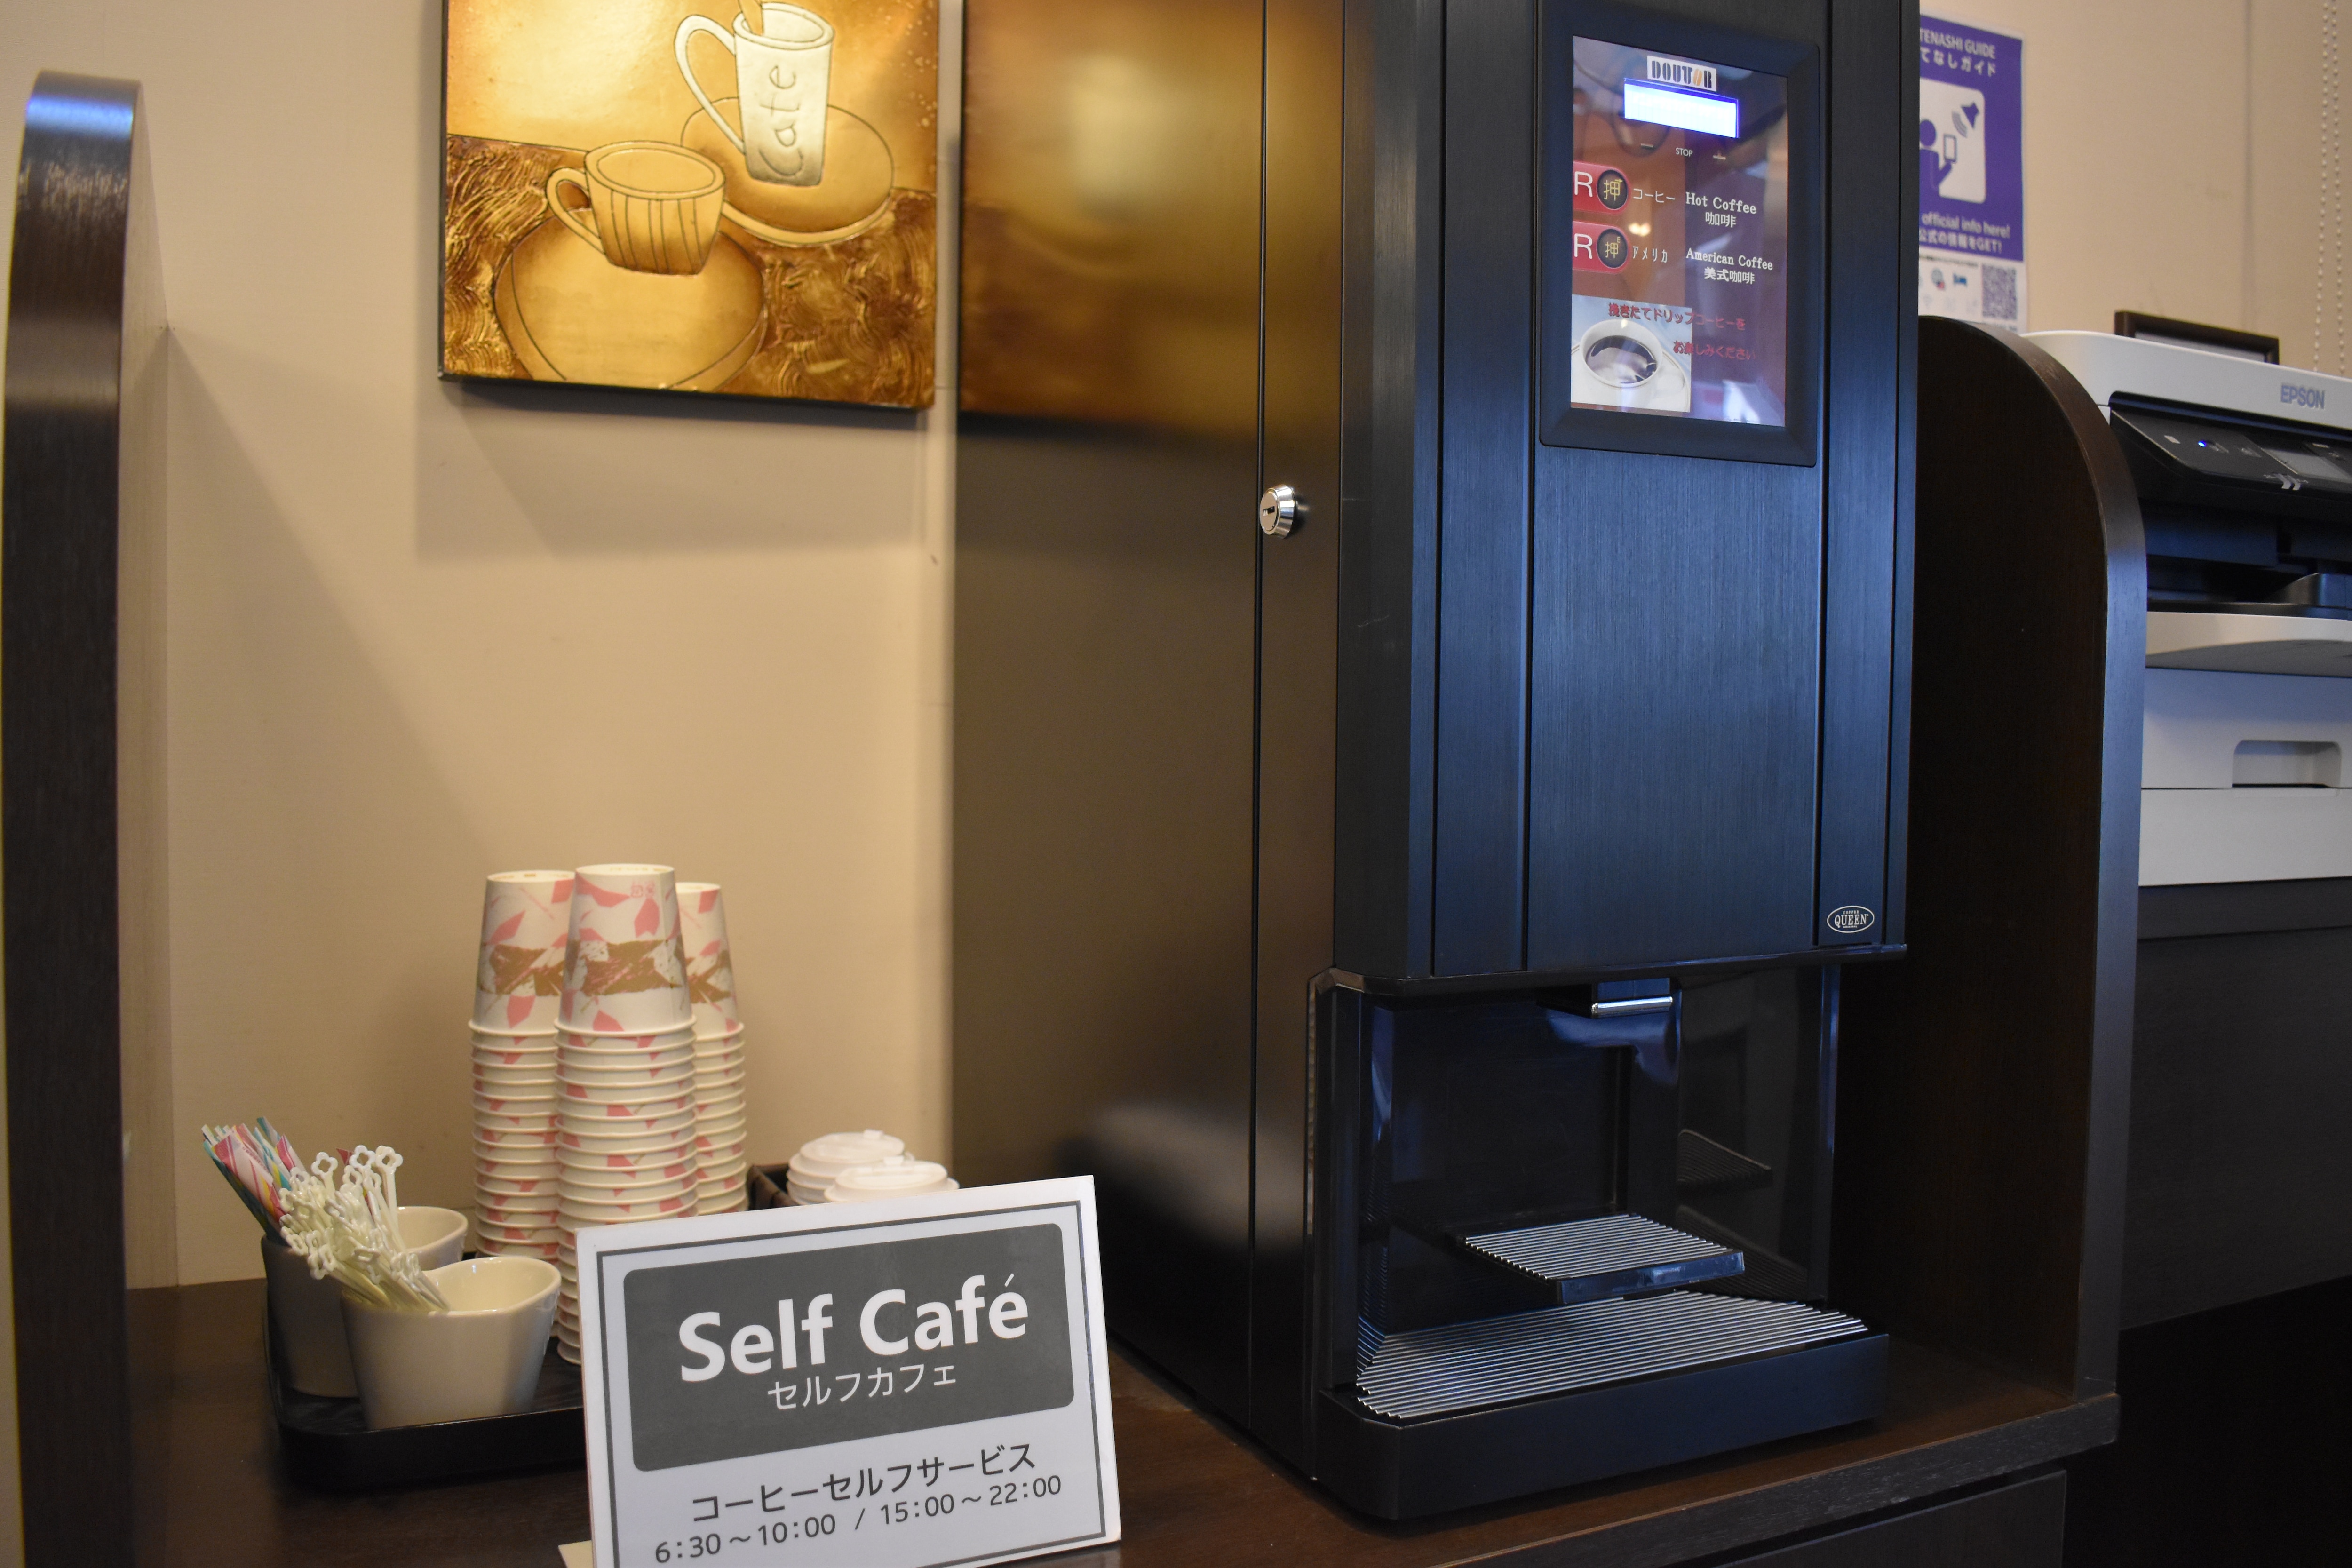 Lobby self-cafe (free) 15: 00-22: 00